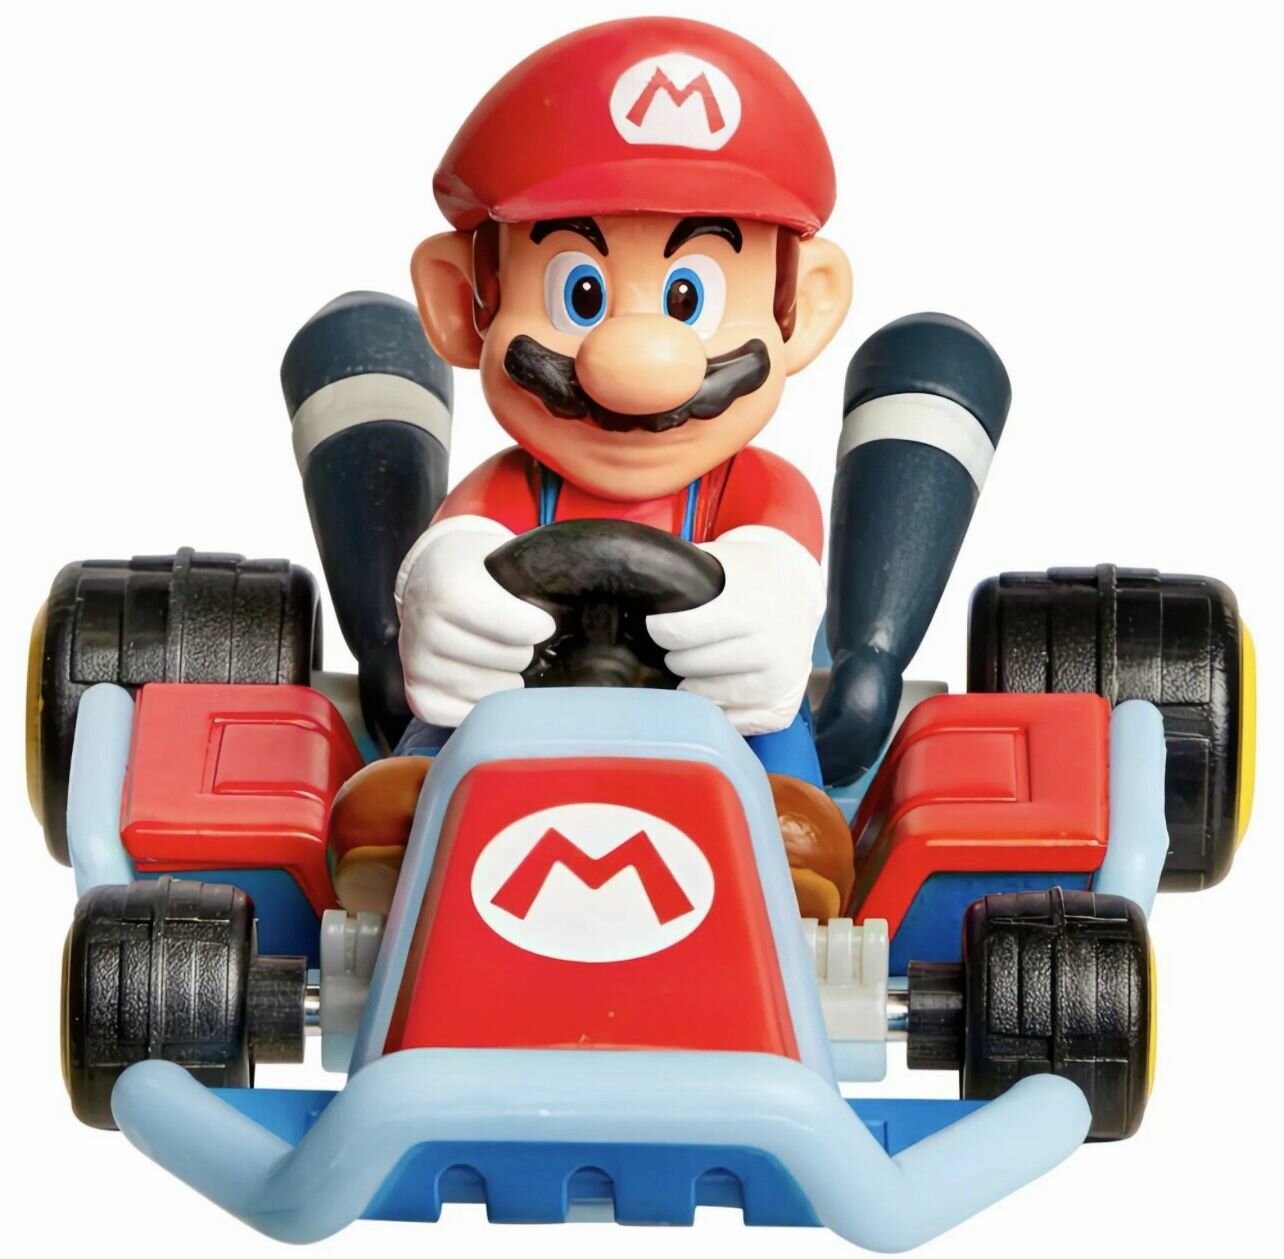 World of Nintendo Марио Super Mario Kart Racers 6 см коллекционная мини-фигурка